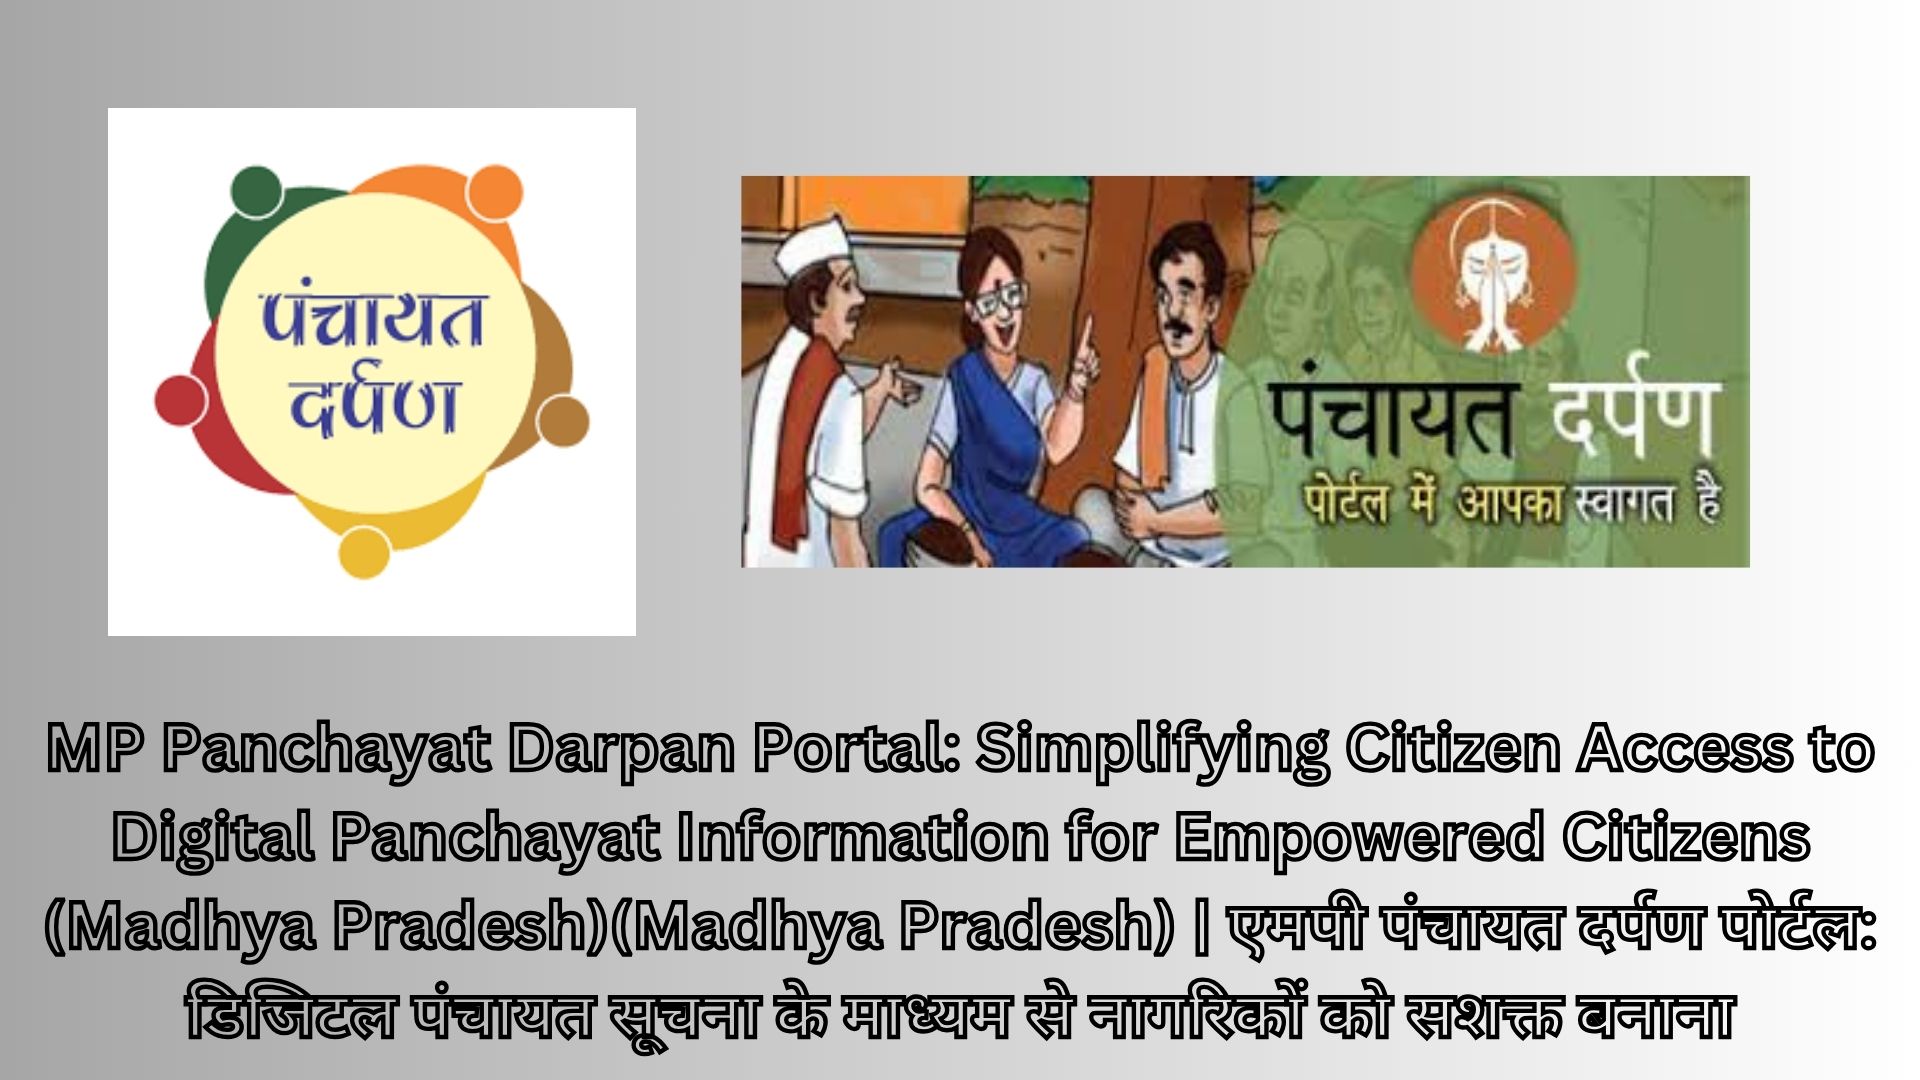 MP Panchayat Darpan Portal: Simplifying Citizen Access to Digital Panchayat Information for Empowered Citizens (Madhya Pradesh)(Madhya Pradesh) | एमपी पंचायत दर्पण पोर्टल: डिजिटल पंचायत सूचना के माध्यम से नागरिकों को सशक्त बनाना